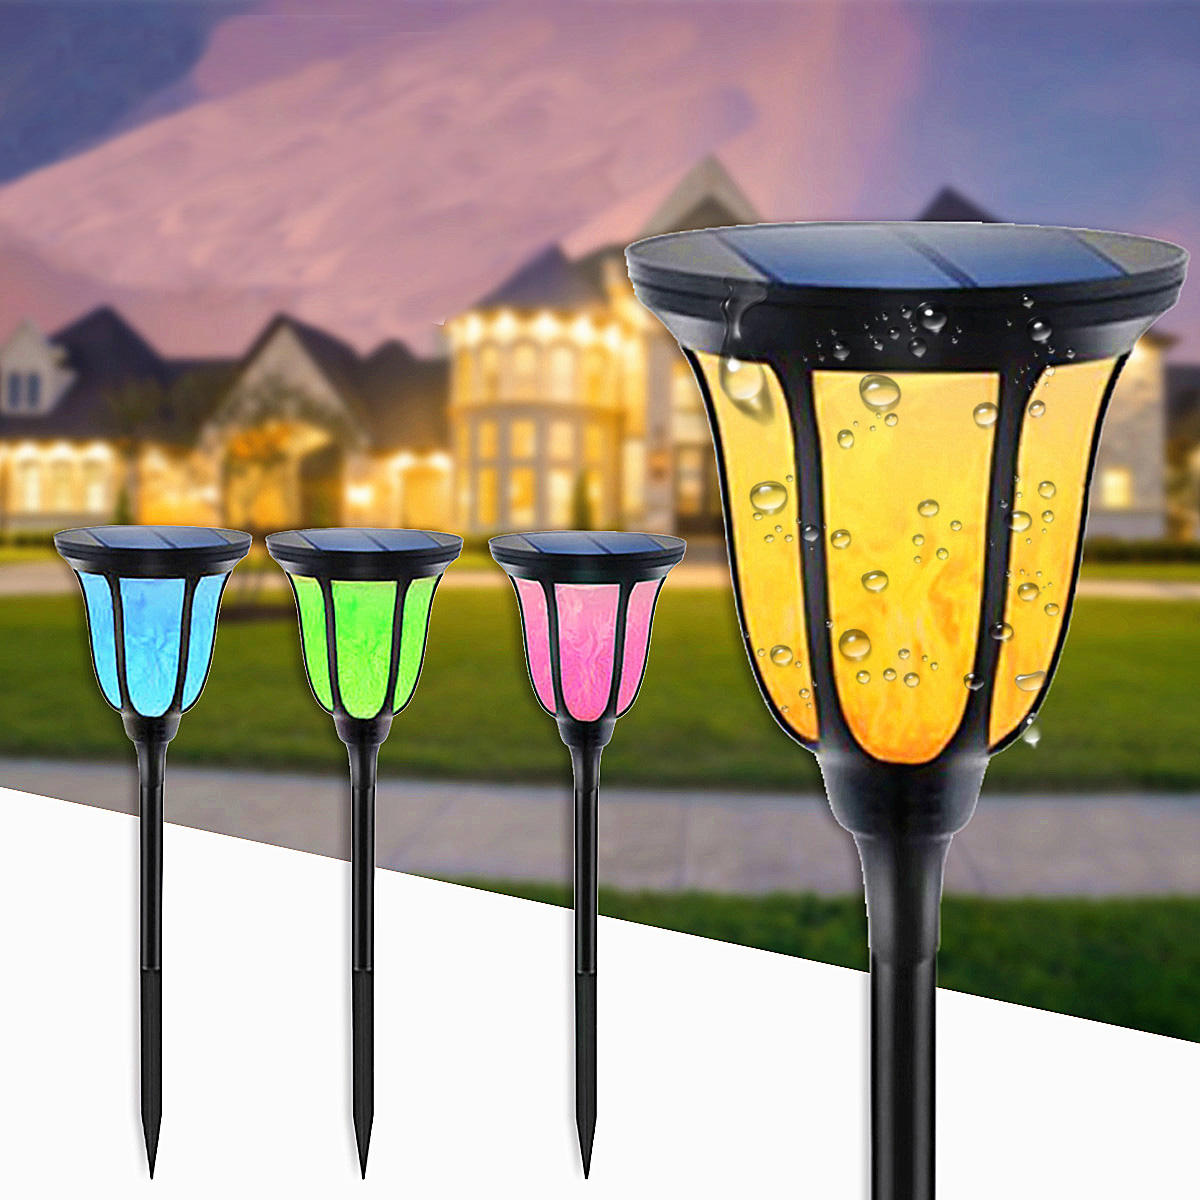 96 LED Solar Flame Light Wasserdicht Camping Garten Decor Laterne Flackern Lampe